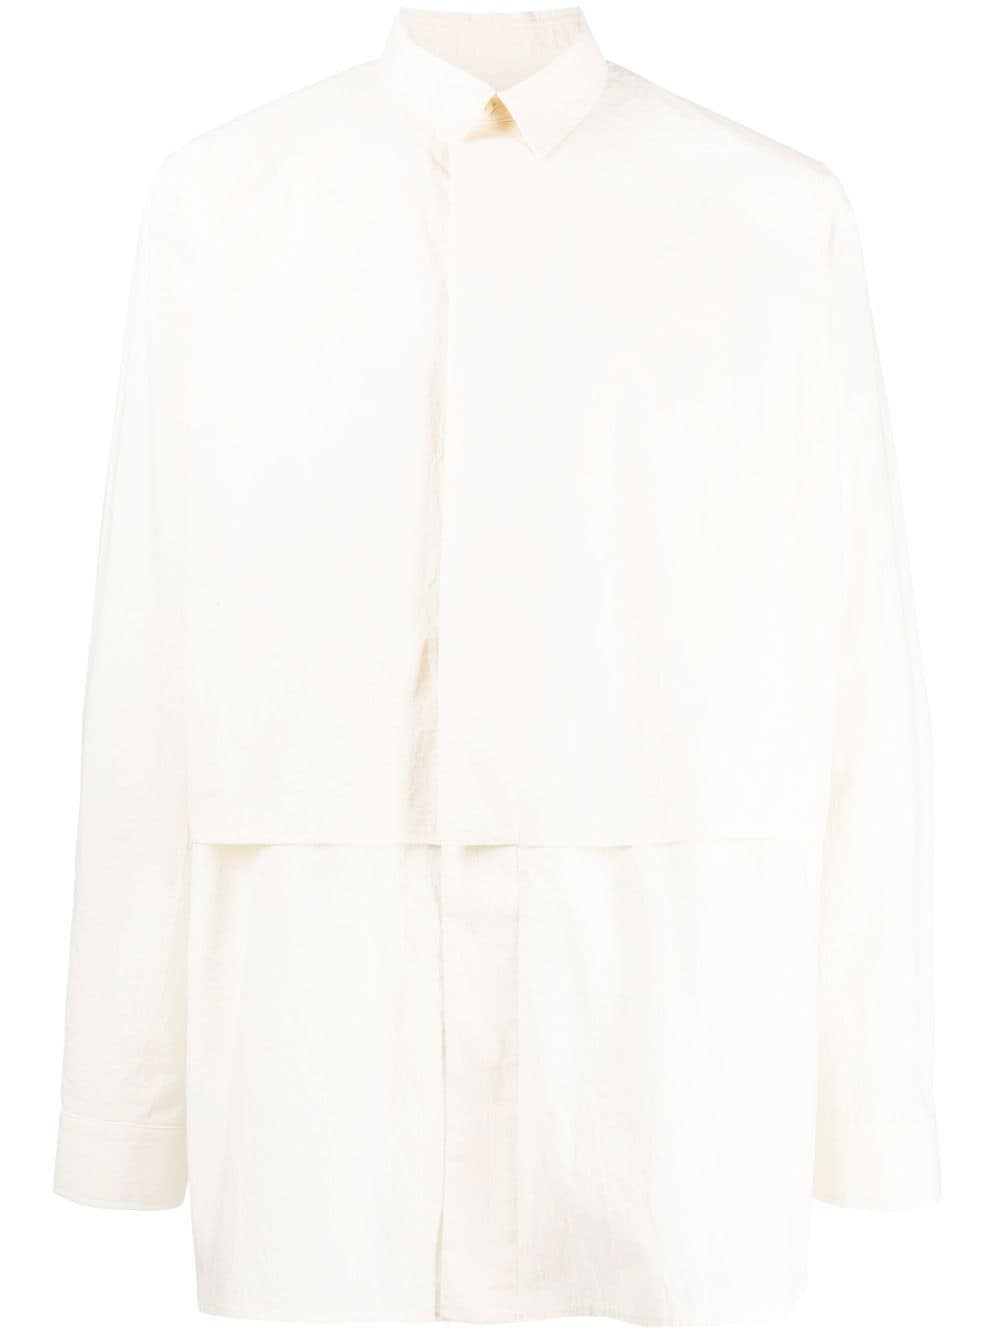 Toogood layered textured shirt - White von Toogood